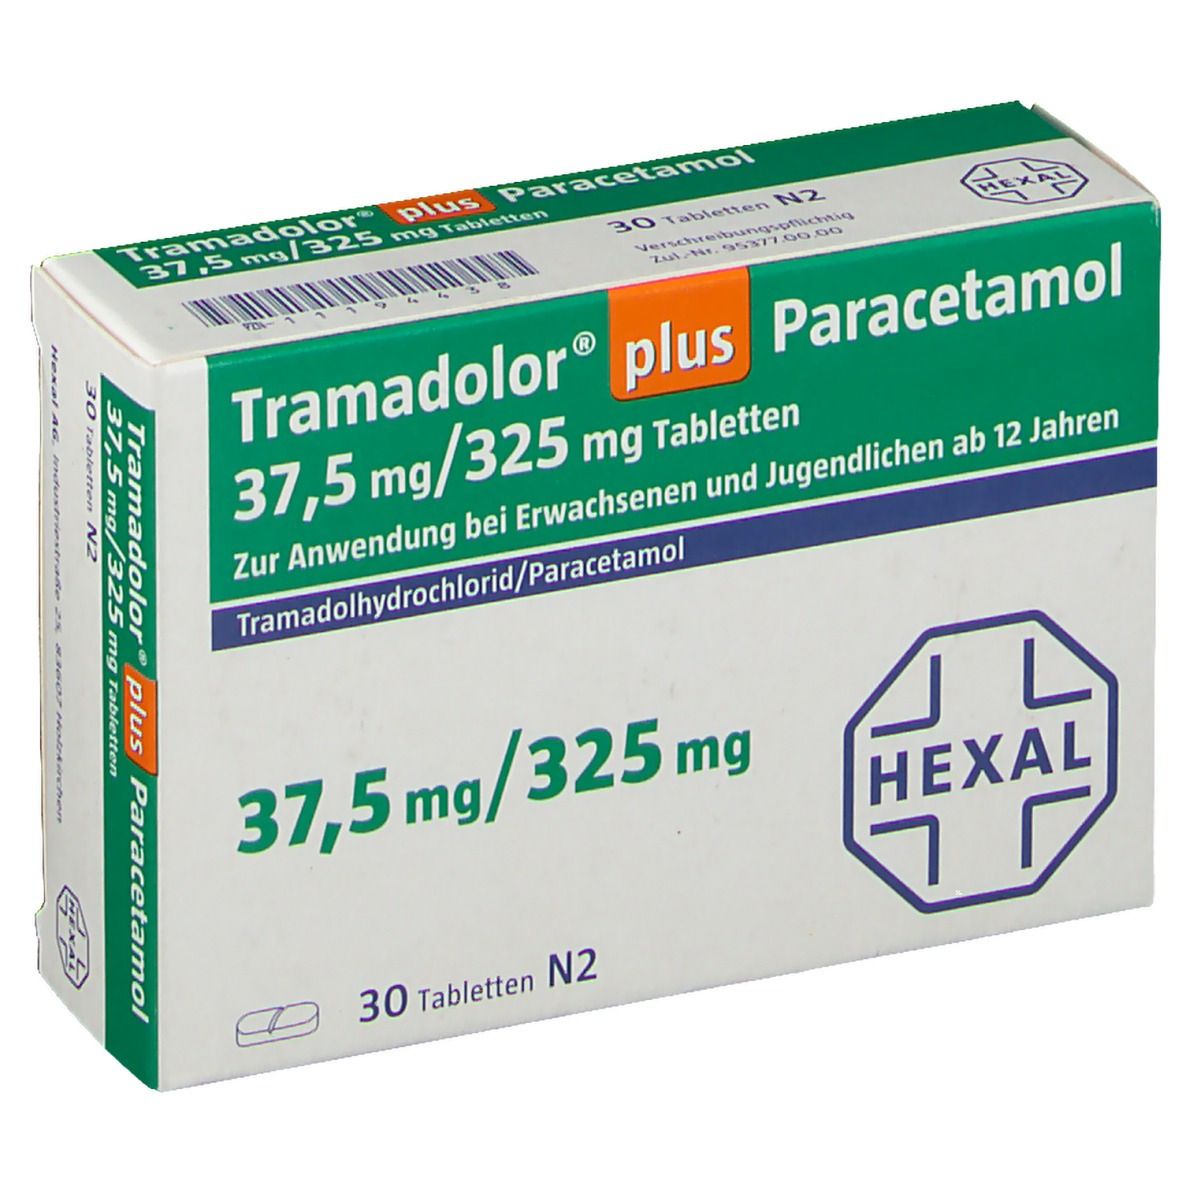 Tramadolor® plus Paracetamol 37,5 mg/325 mg